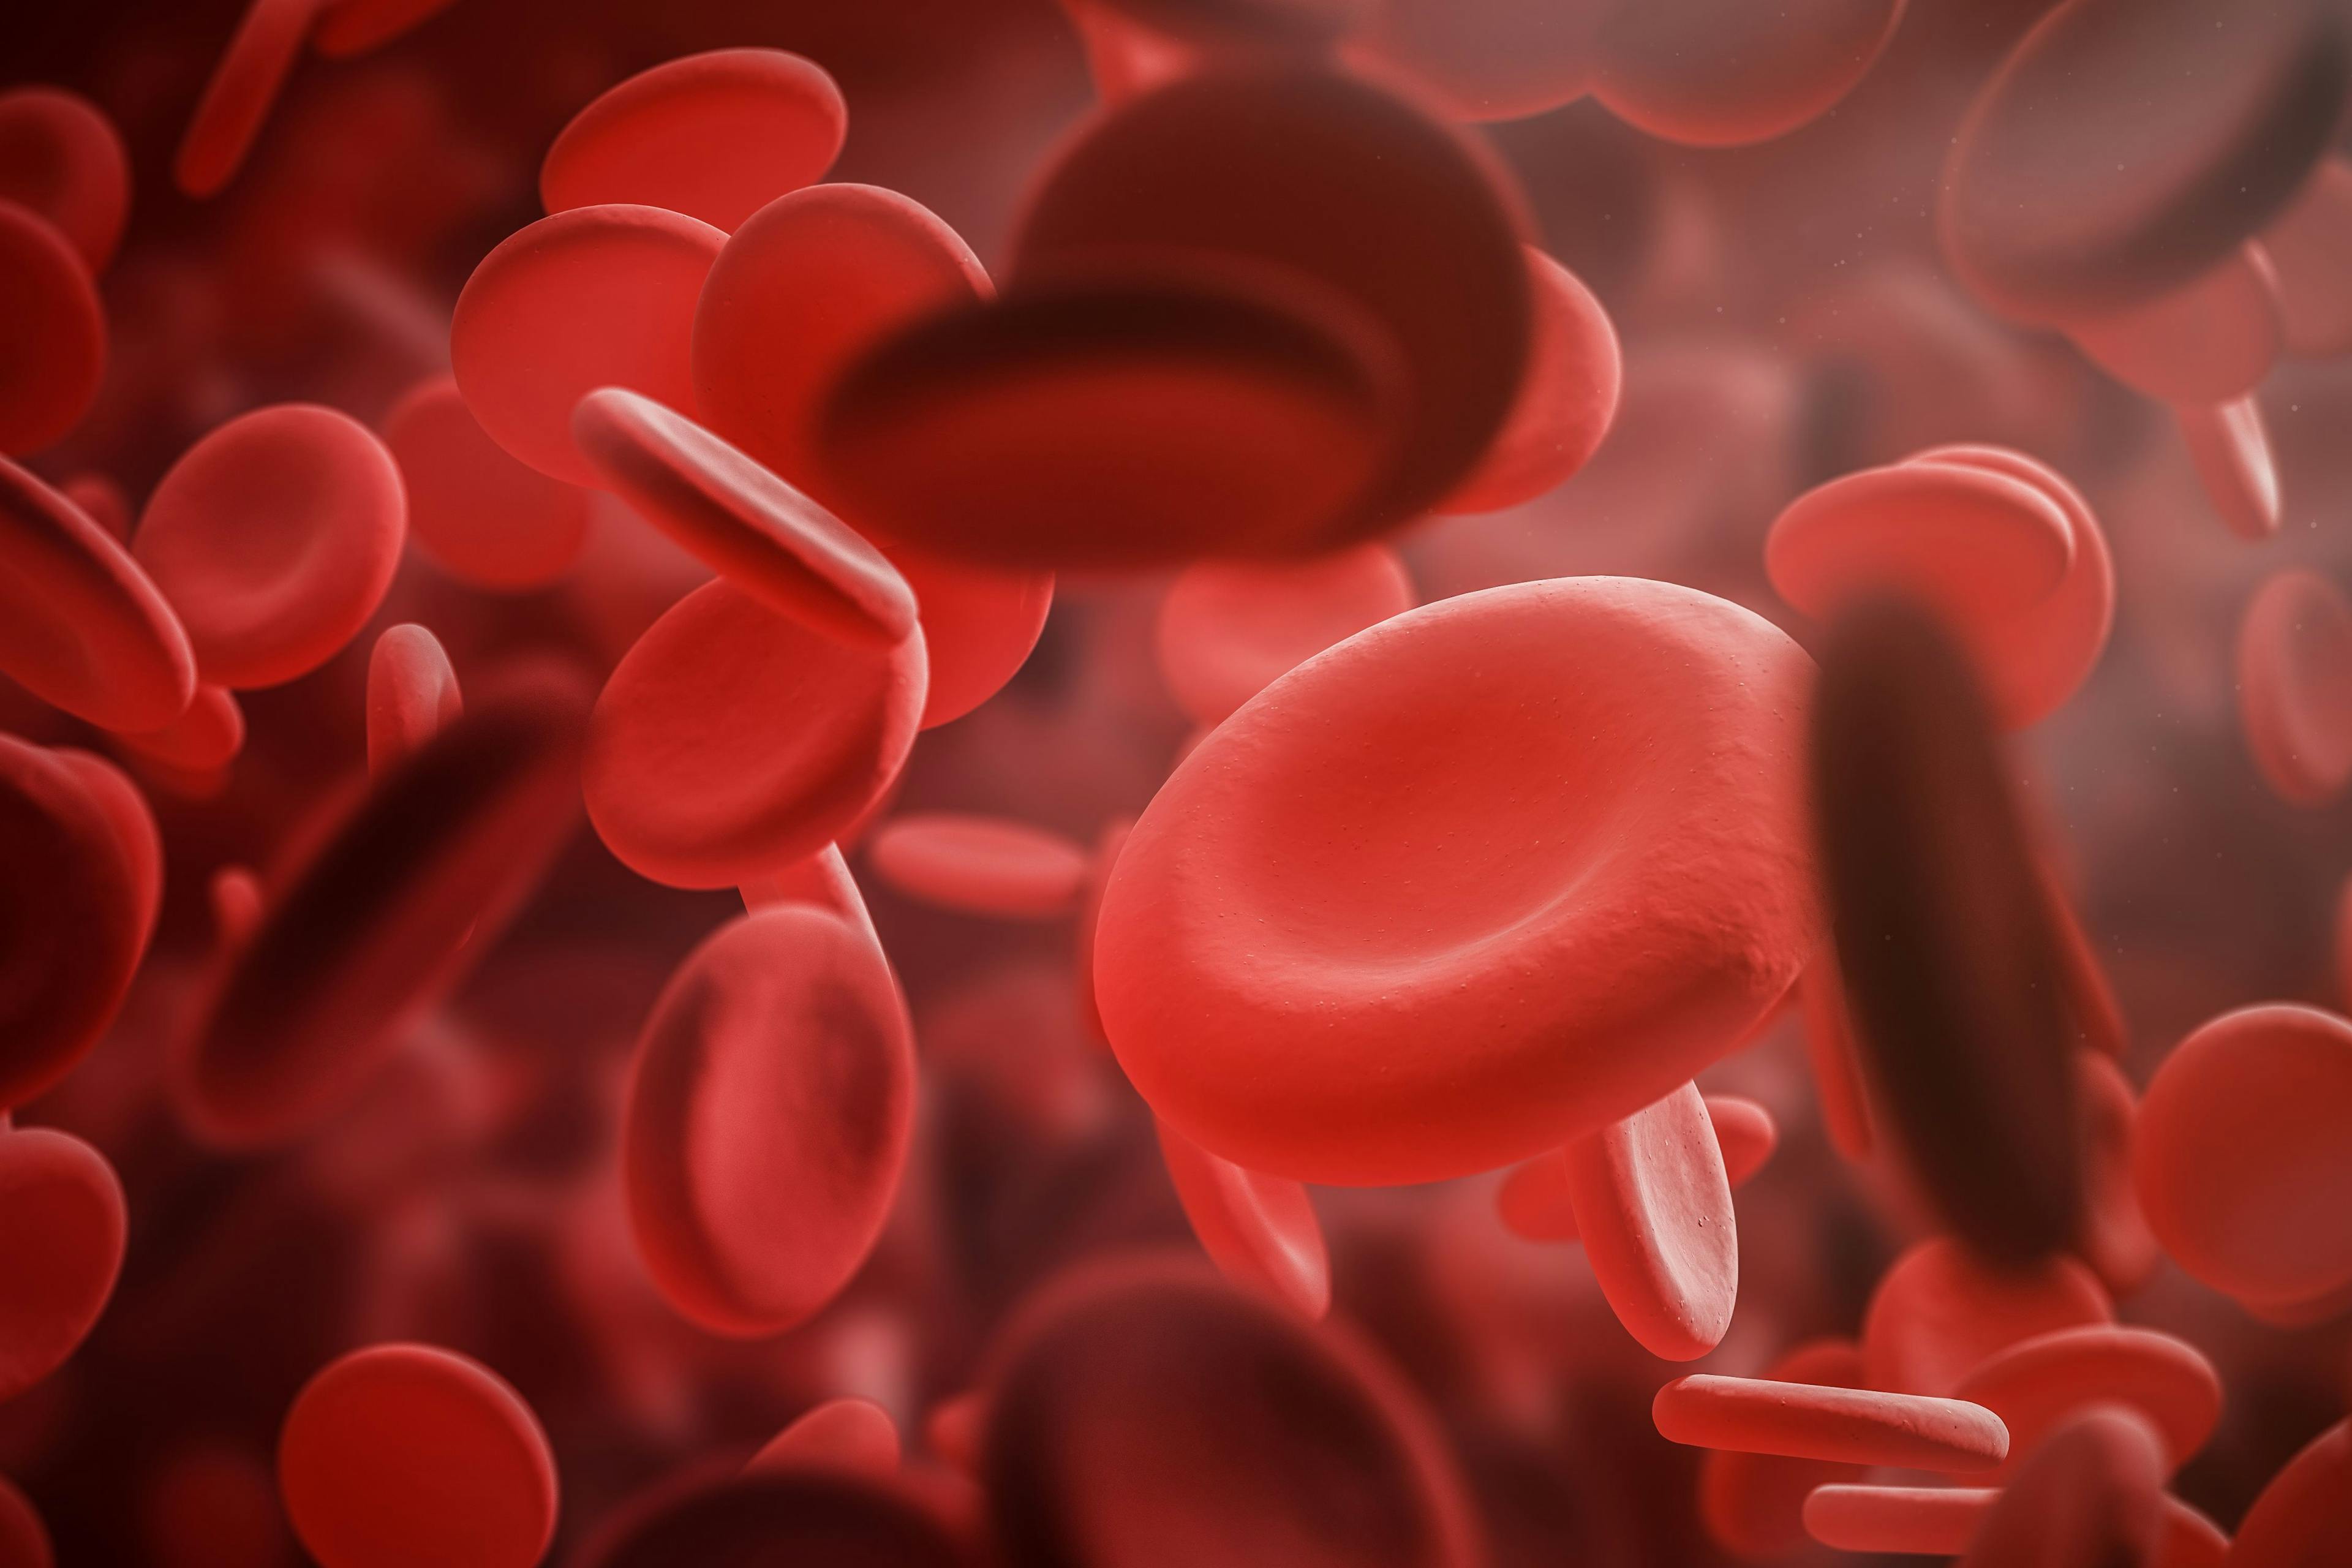 Red eritrosit blood count medical concept | Image Credit: ImageFlow - stock.adobe.com